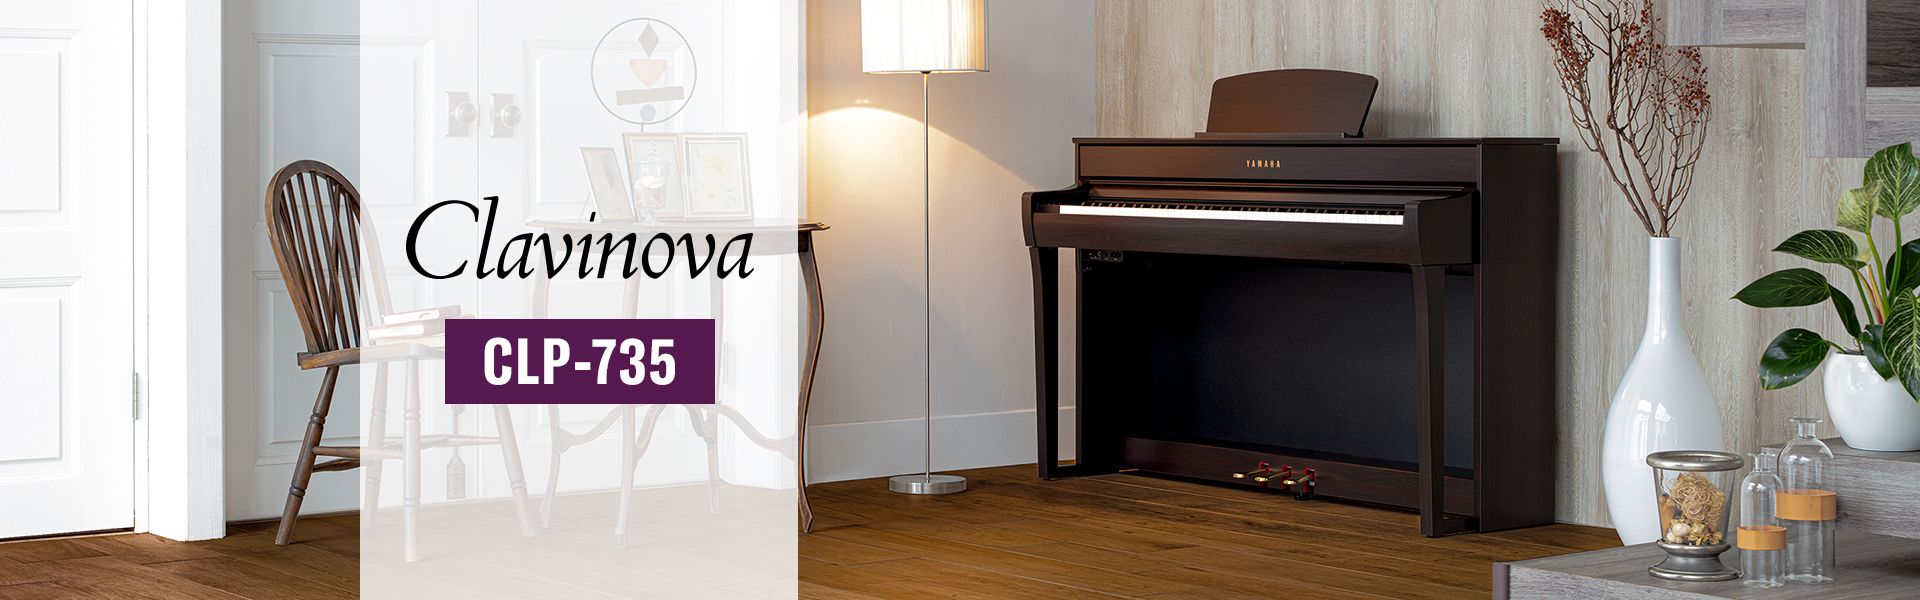 CLP-735 Clavinova Digital Piano - Yamaha USA